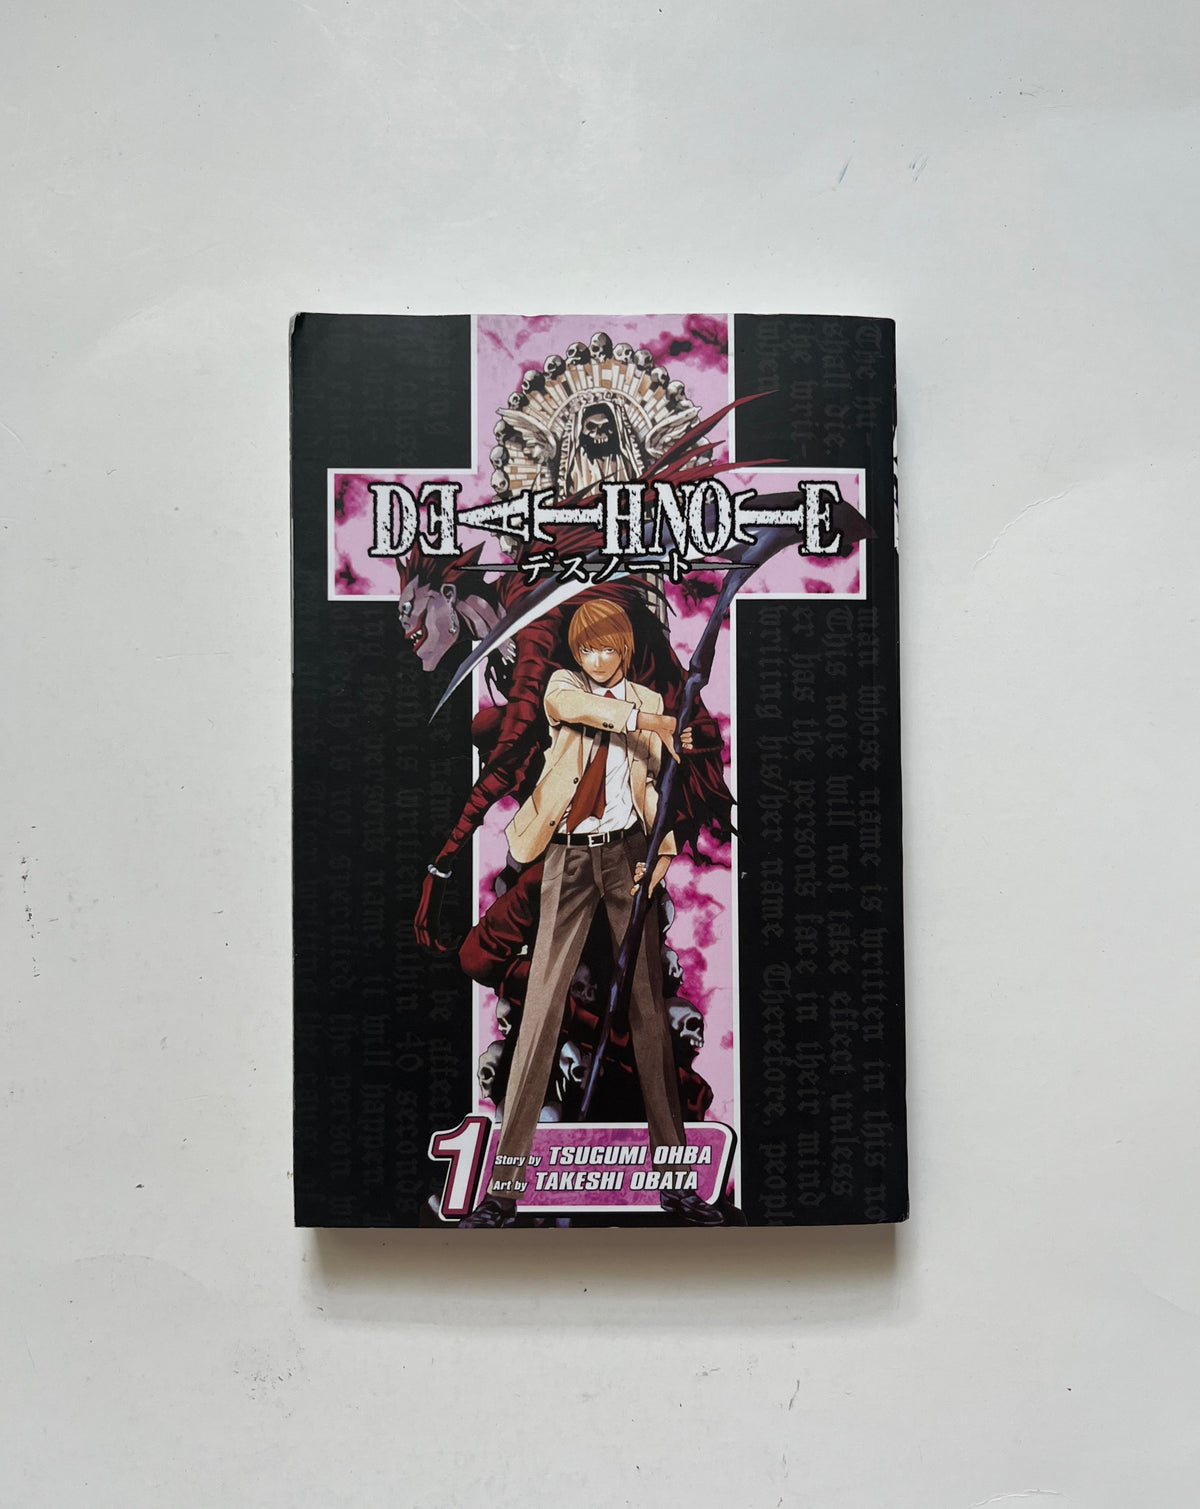 Deathnote 1 by Tsugumi Ohba &amp; Takeshi Obata